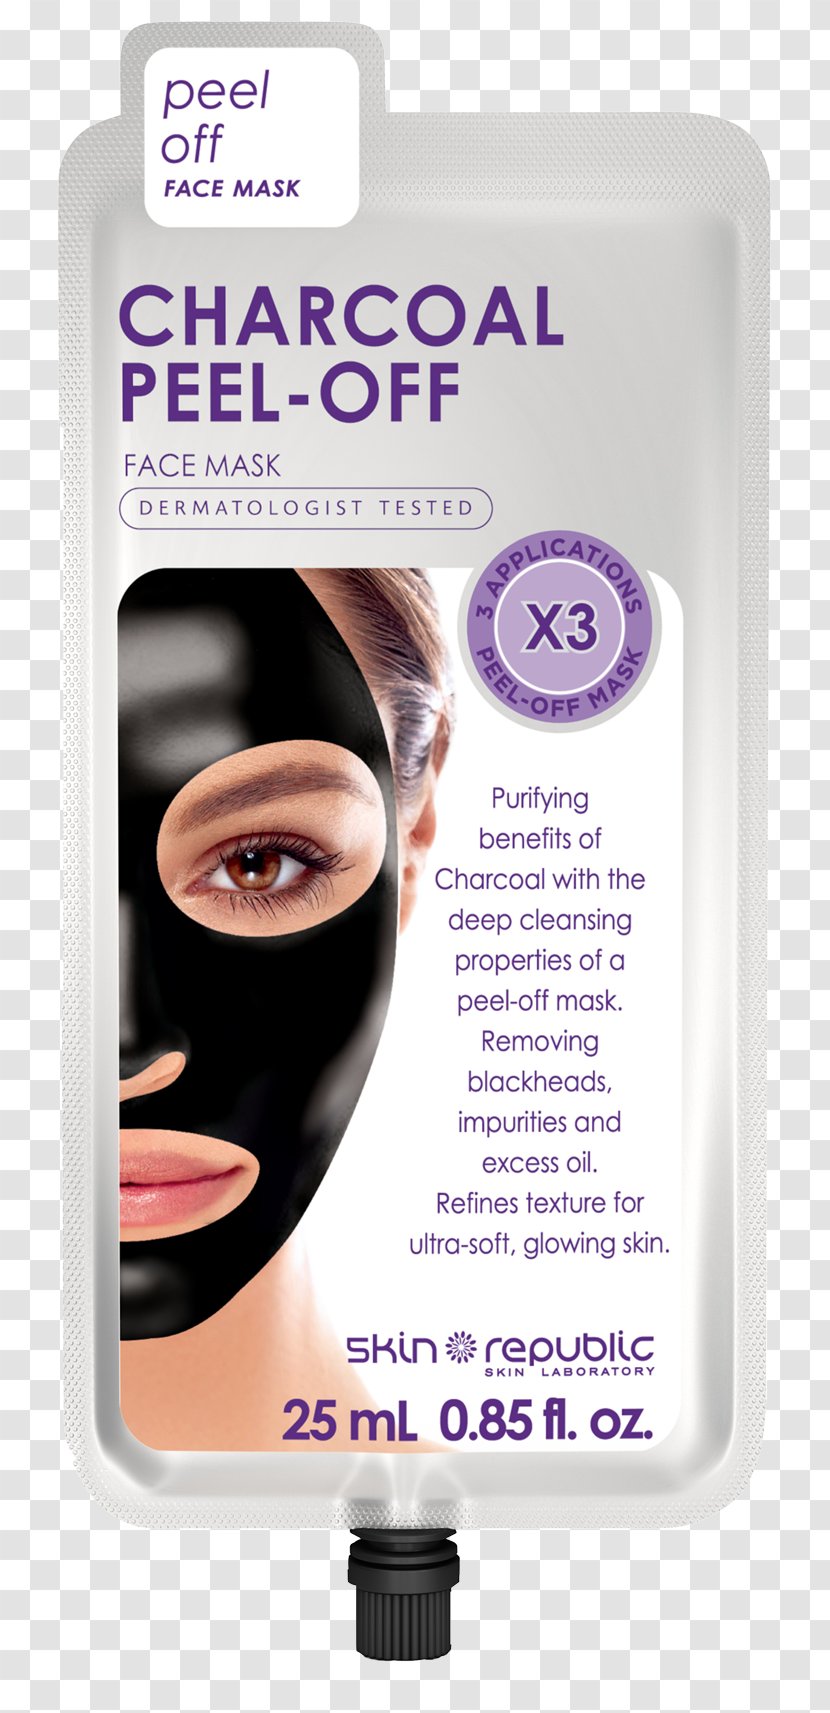 Facial Mask Skin Republic Charcoal Peel-Off Face - Human Transparent PNG